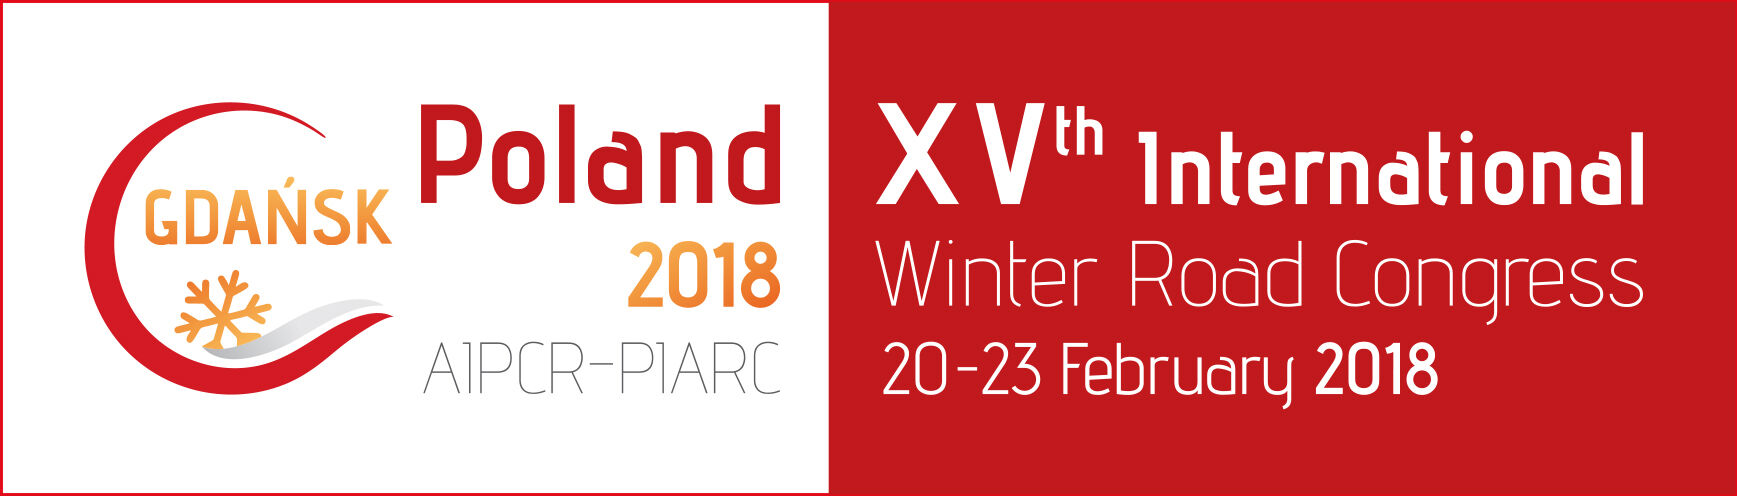 XV
International Winter Road Congress - Gdansk 2018 - PIARC